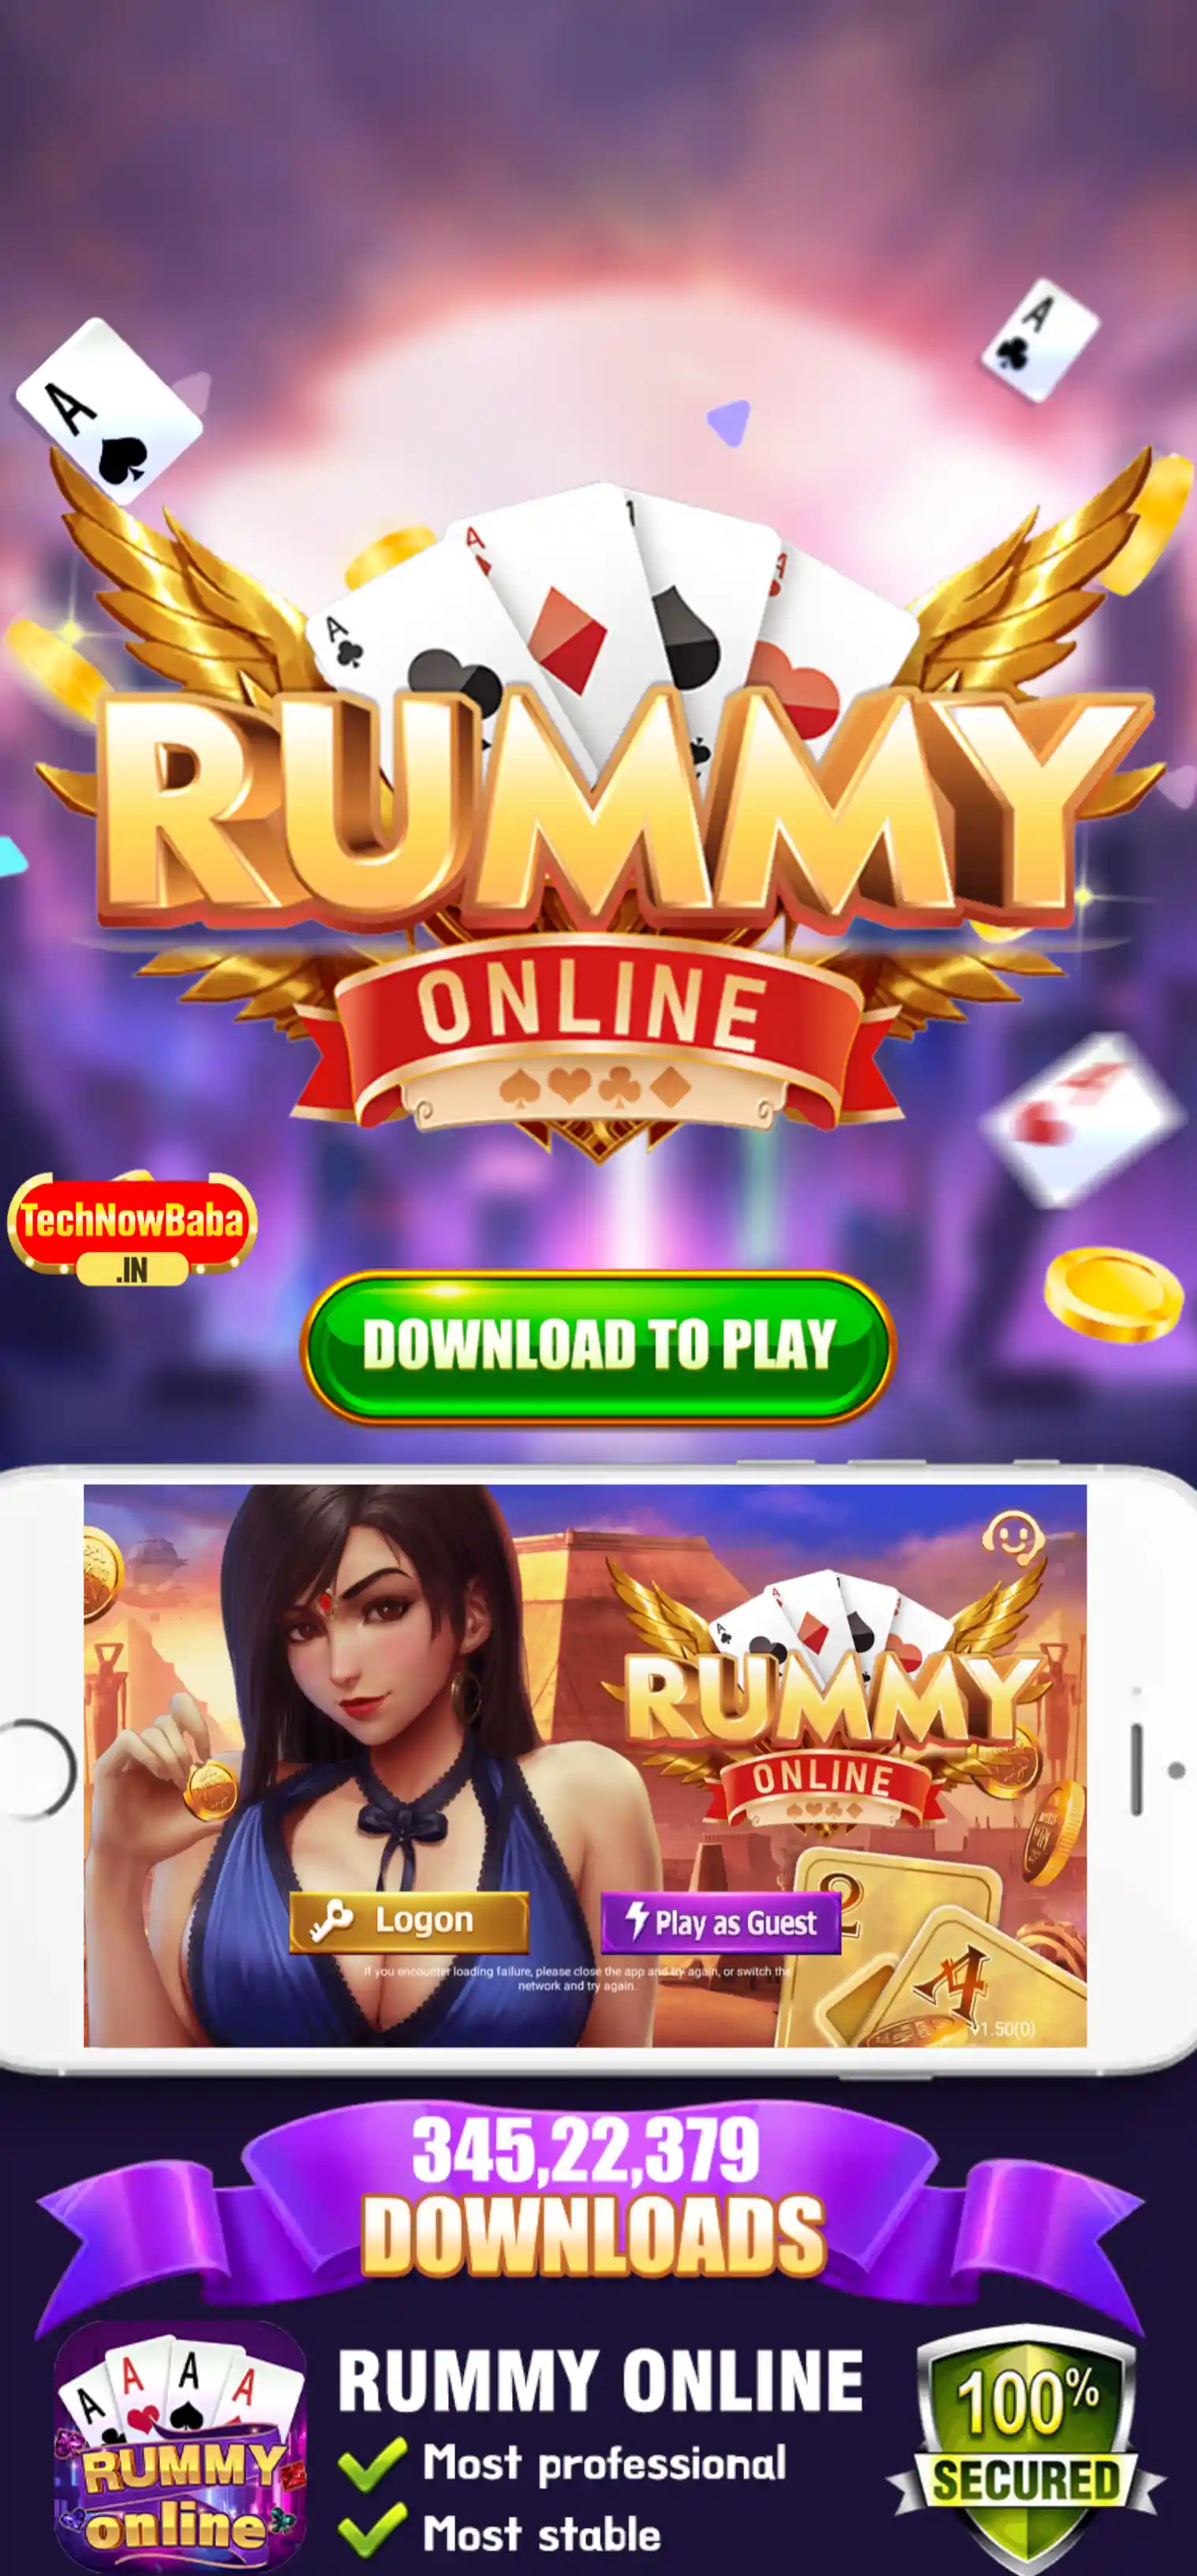 Rummy Online App Tech Now Baba